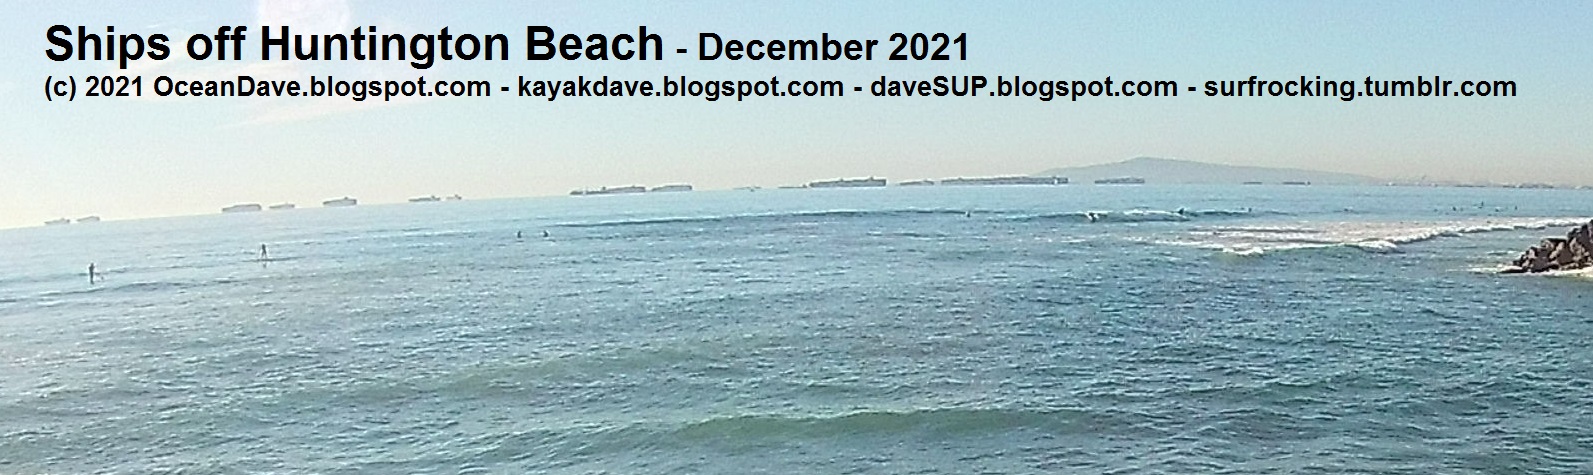 Ships off Huntington Beach December 2021